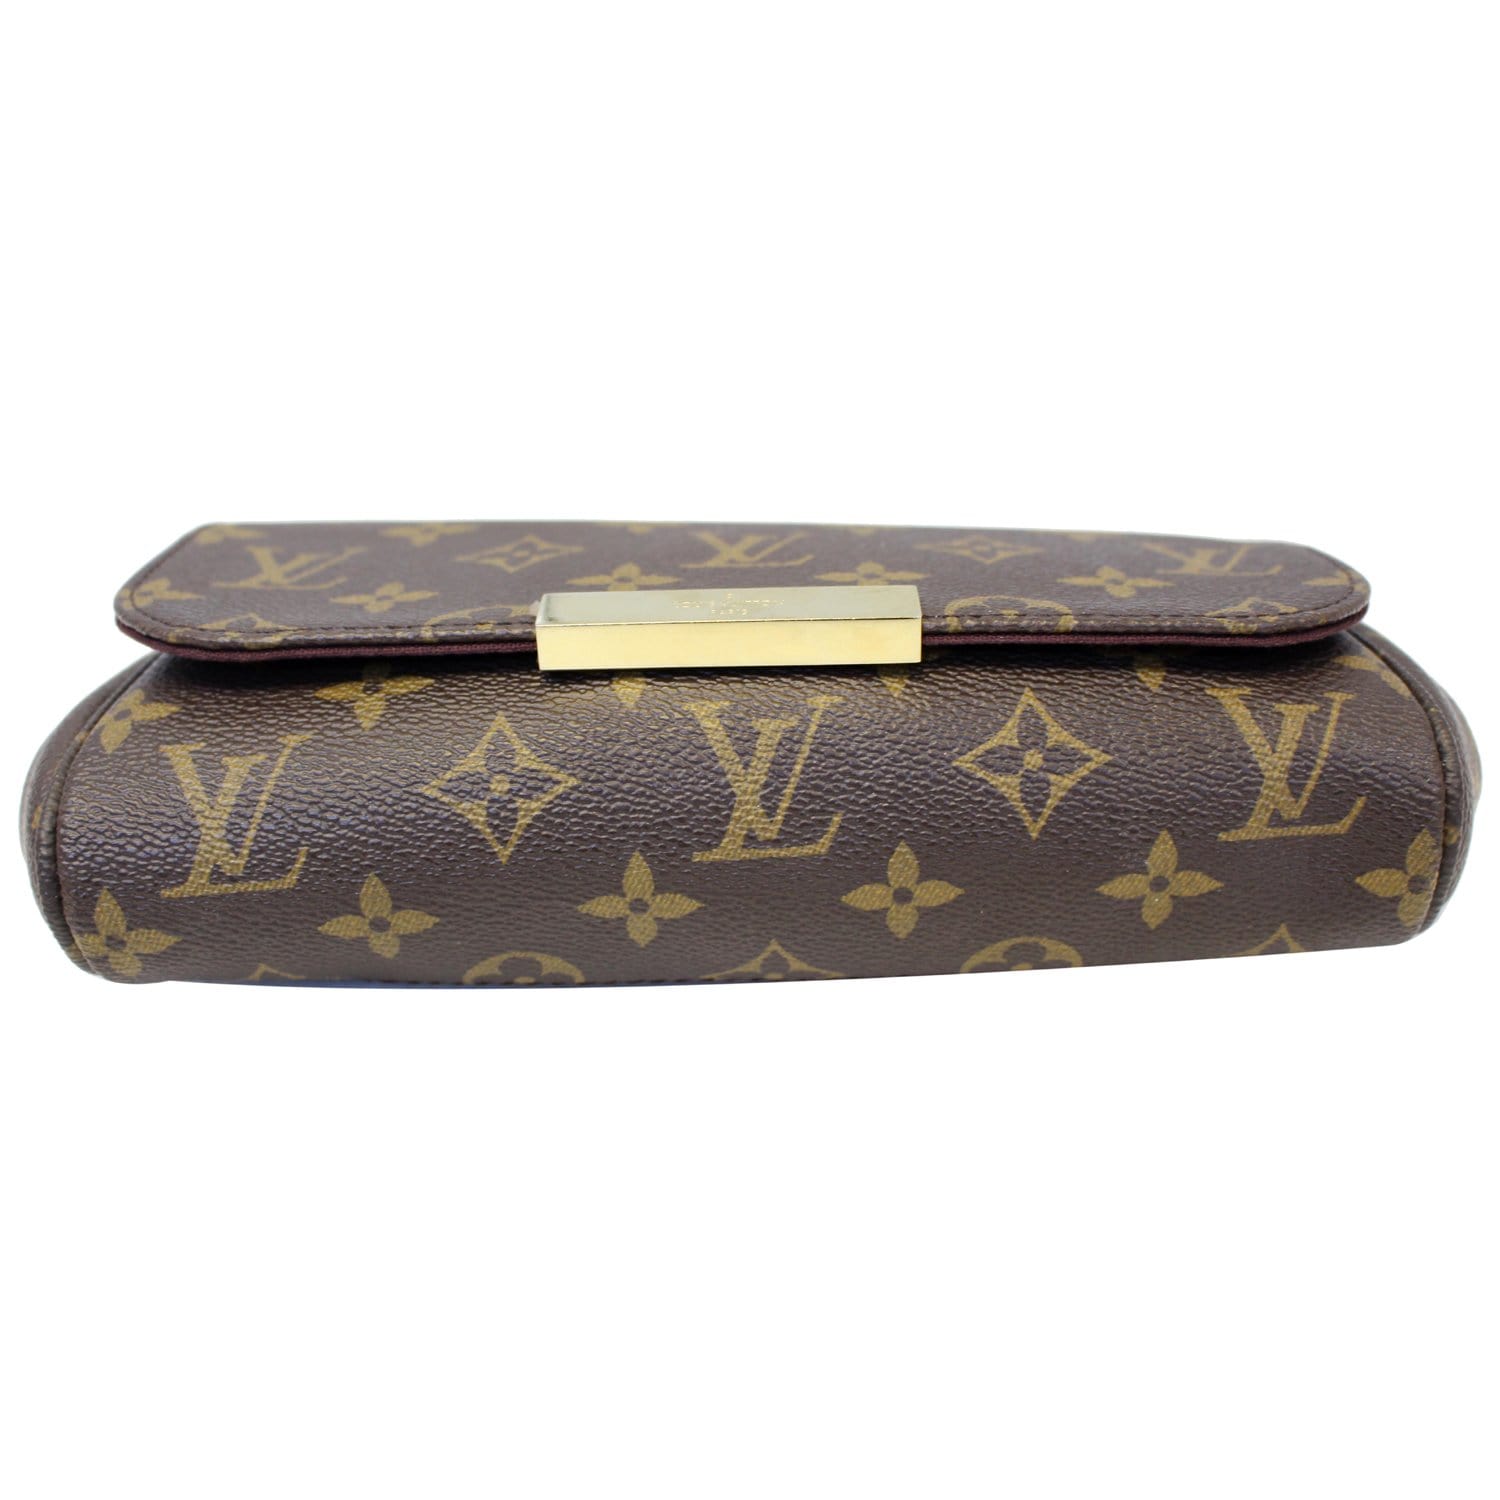 Louis Vuitton City Cruiser Handbag Monogram Canvas and Leather PM Brown  690571